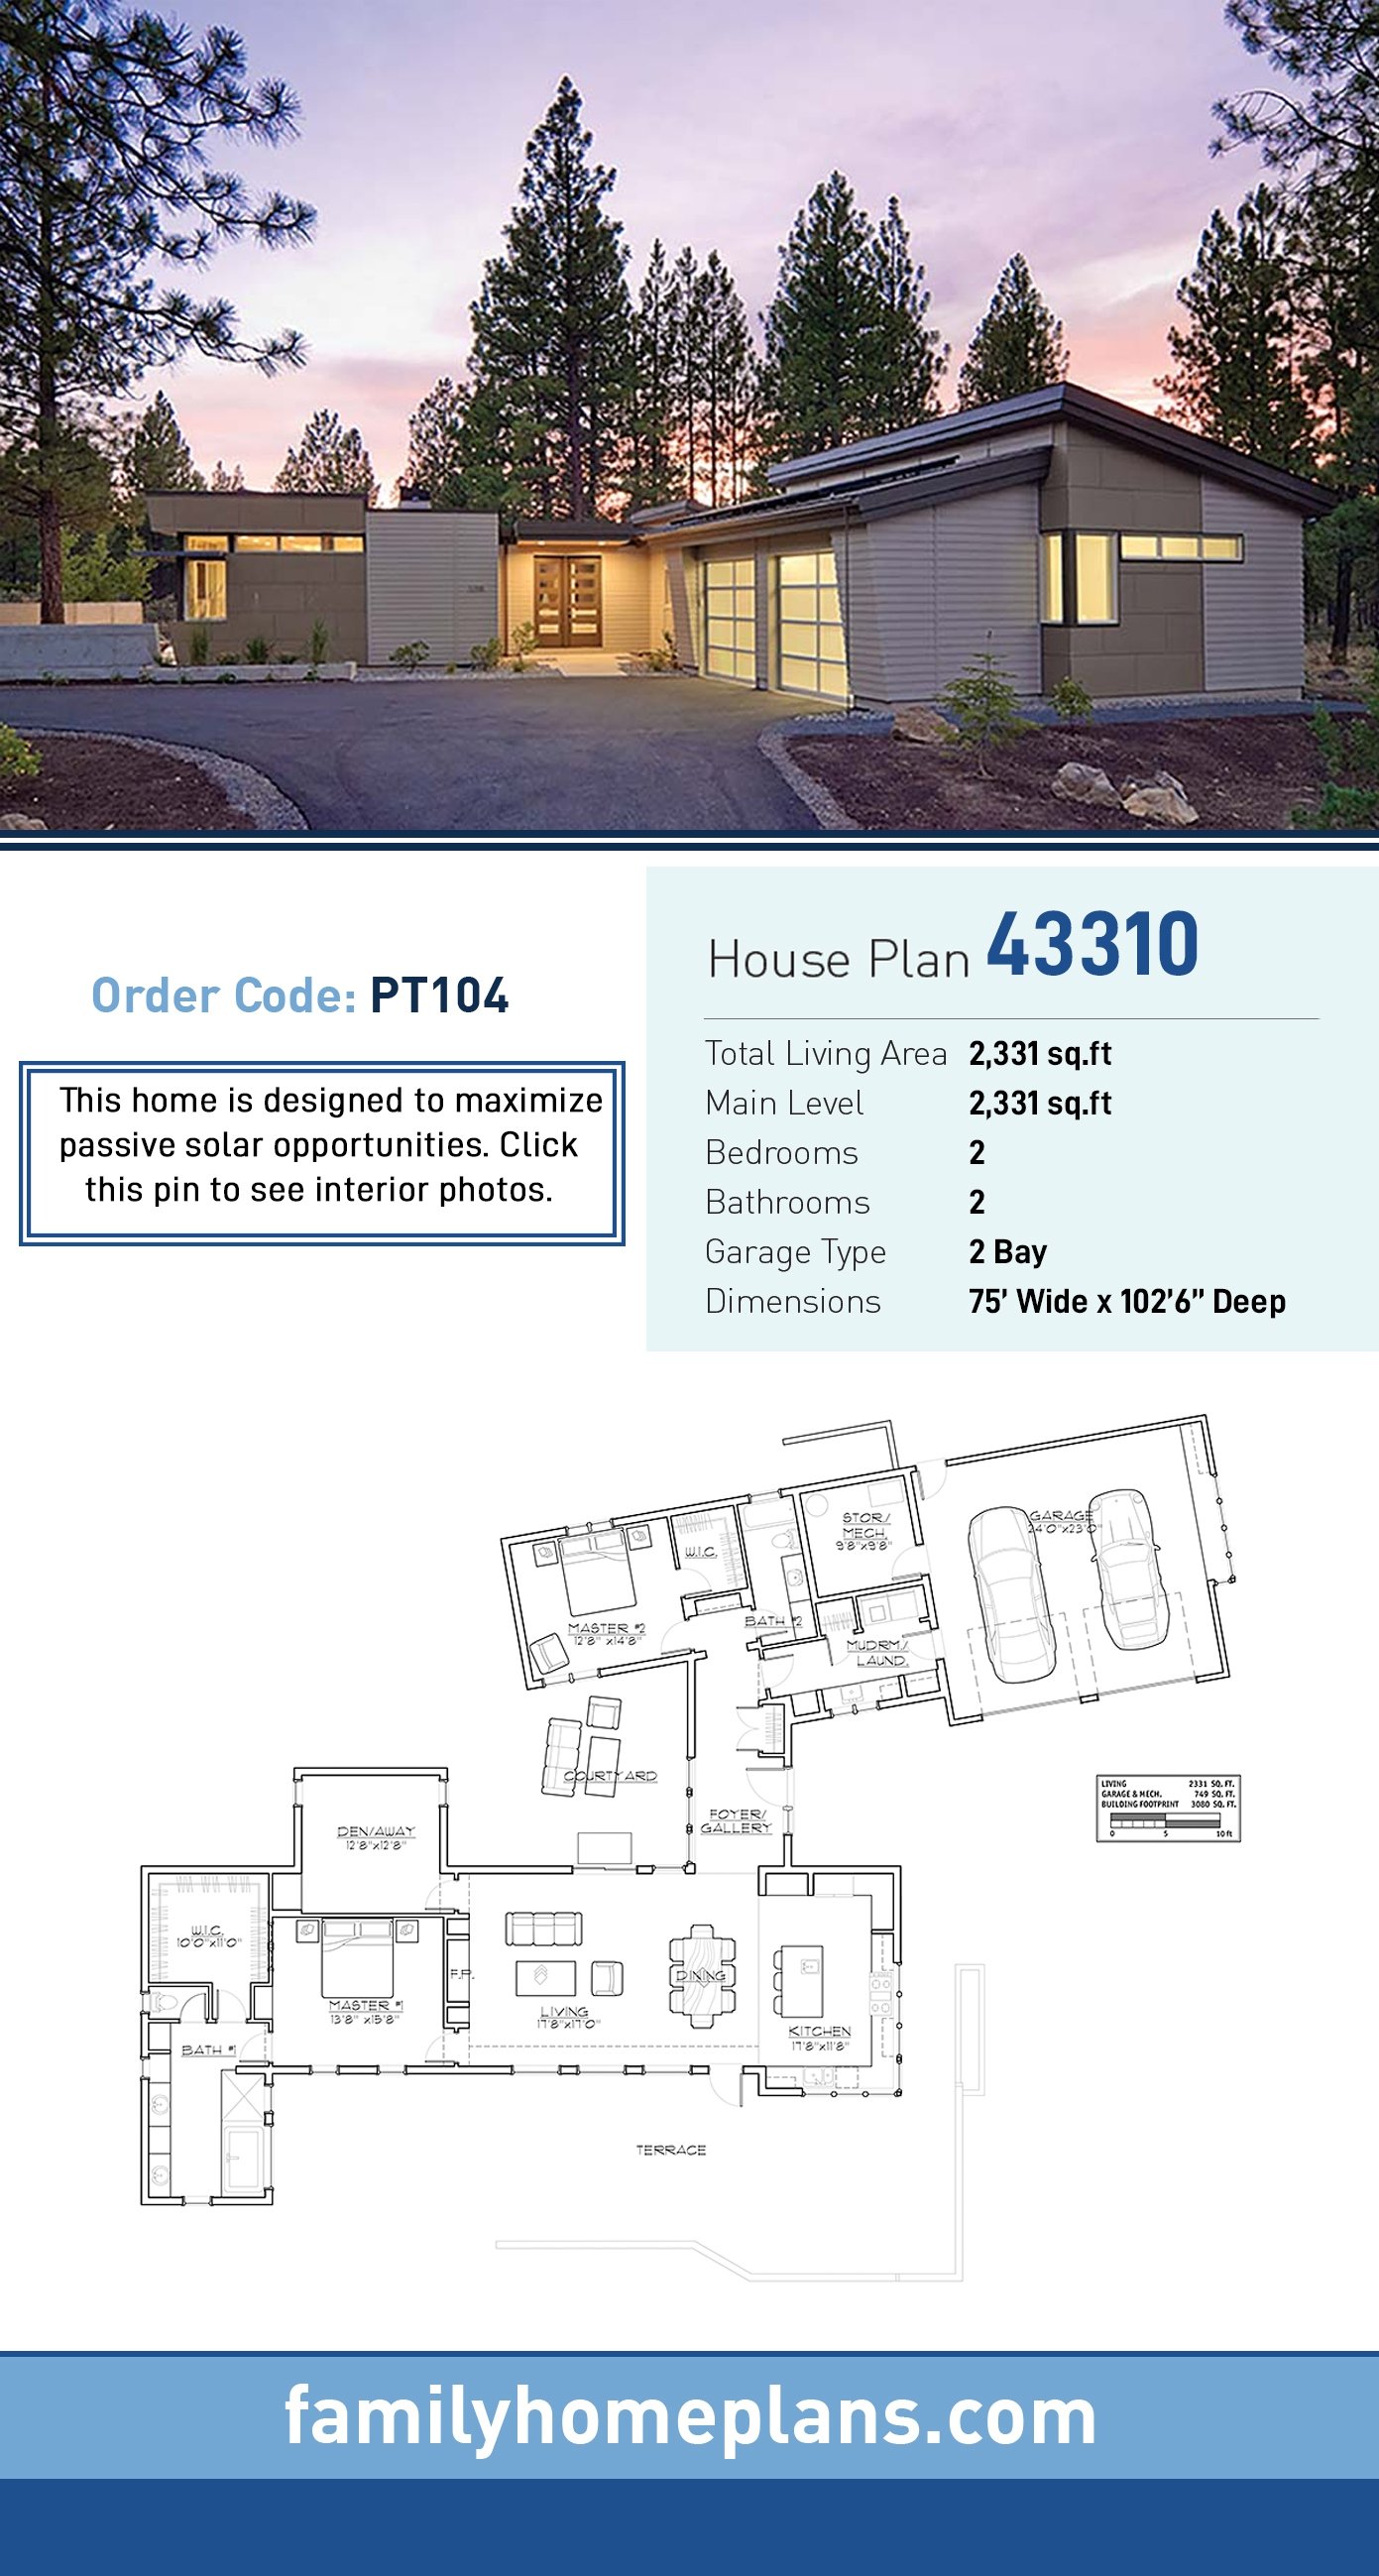 House Plan 43310